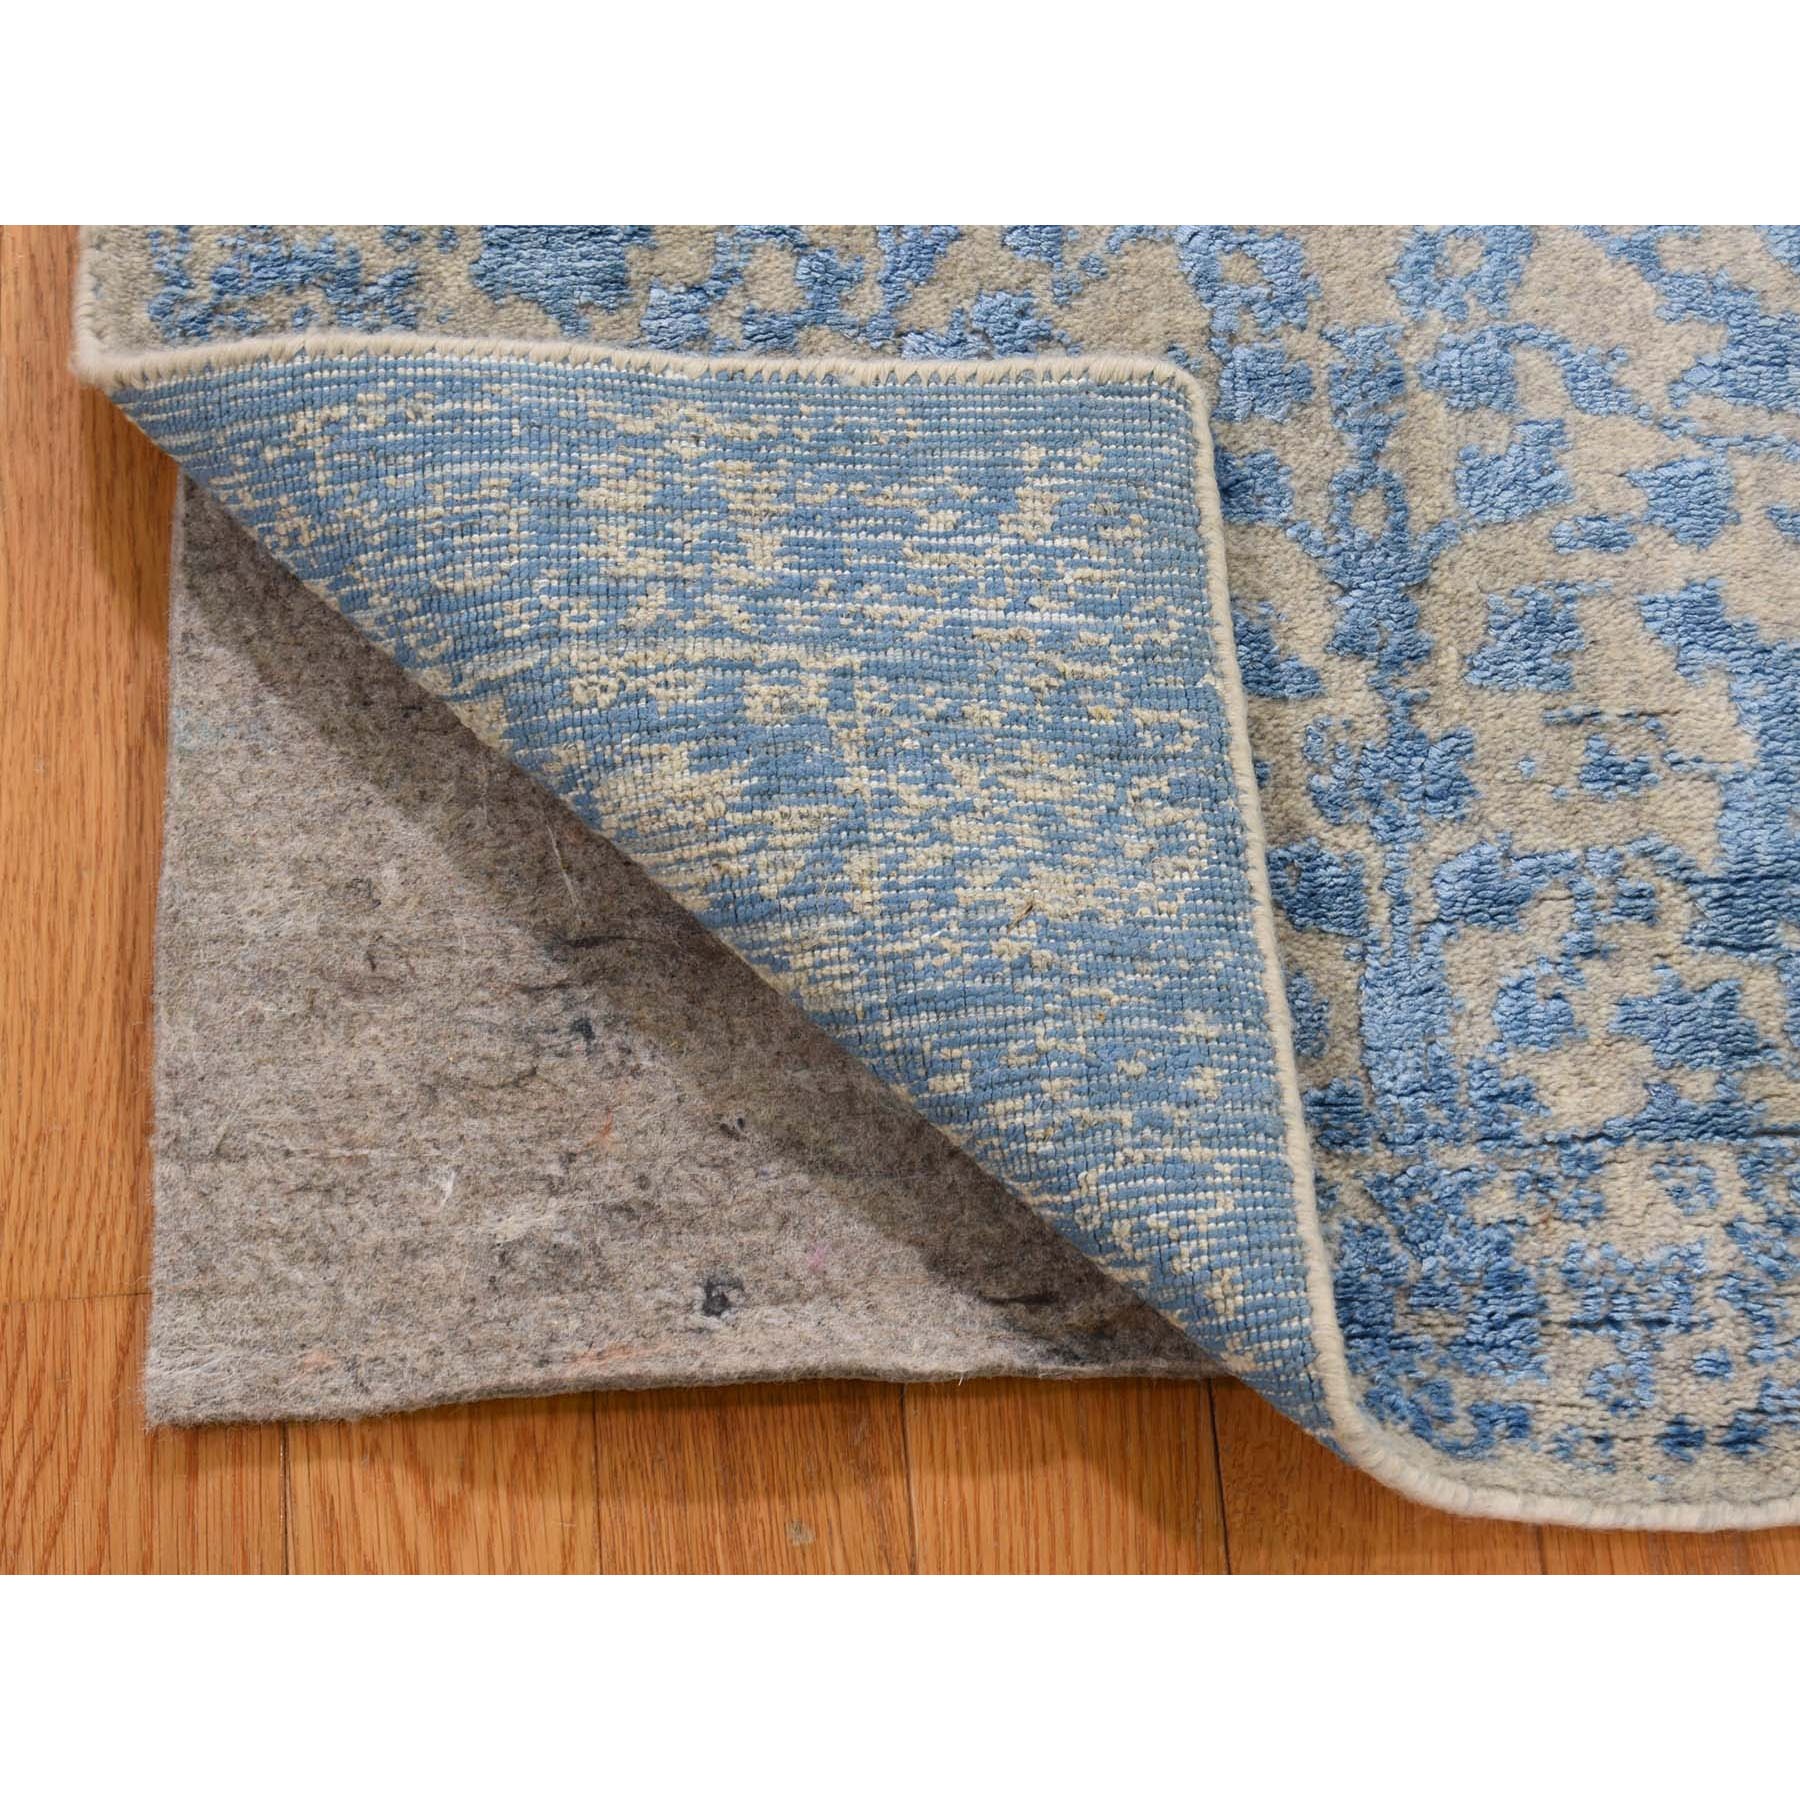 2-5 x8- Jacquard Hand Loomed Blue Broken Cypress Tree Design Silken Thick And Plush Runner Oriental Rug 